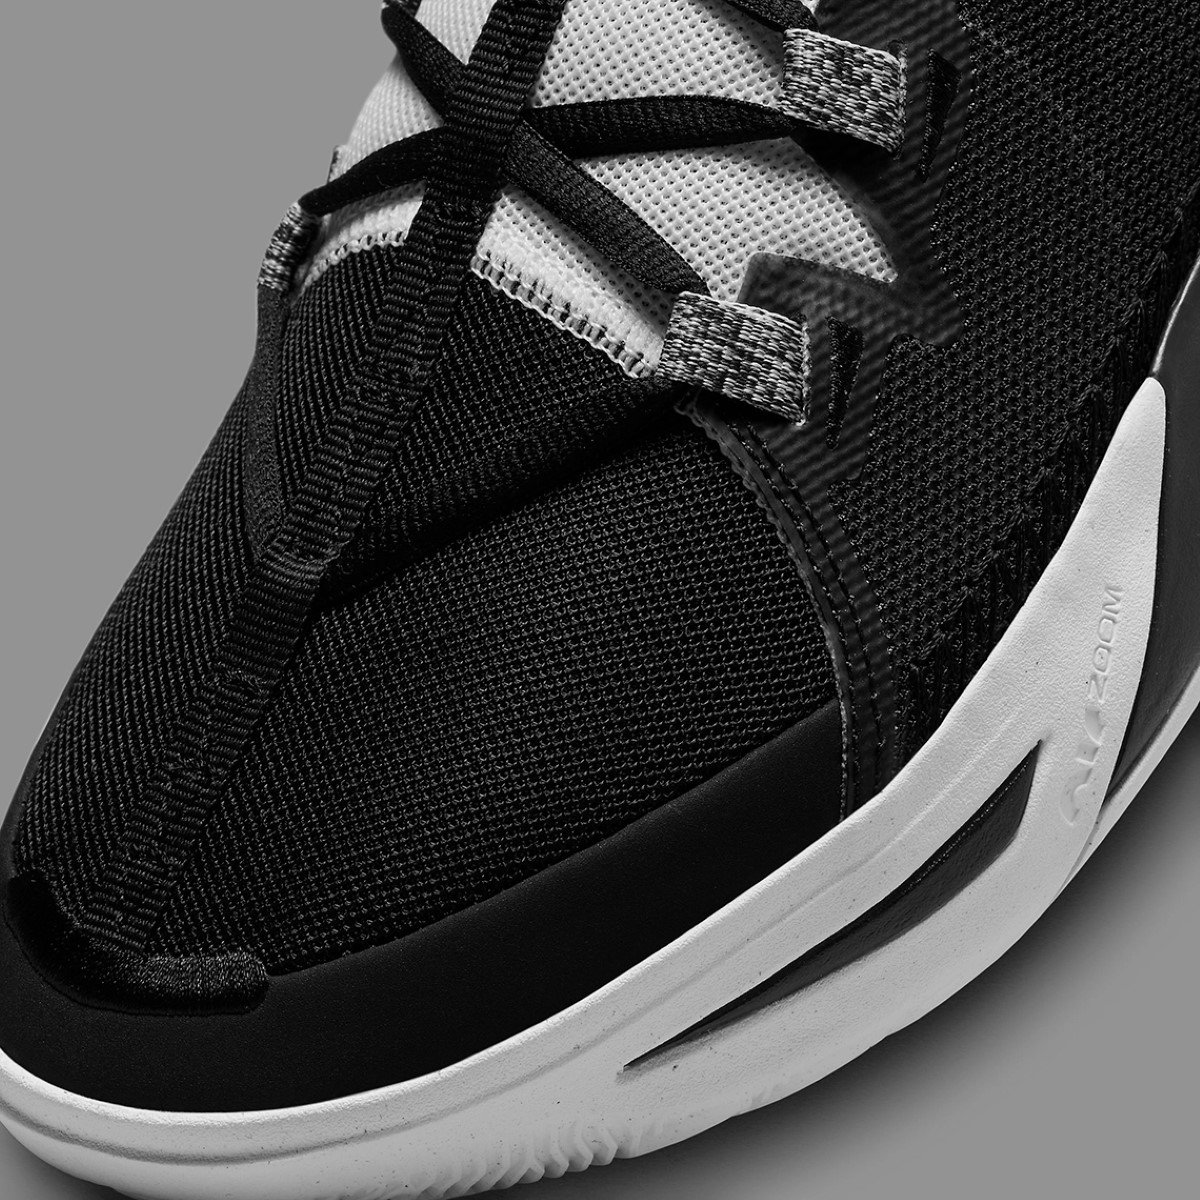 Nike Kyrie Flytrap 6 "Black & Wite"